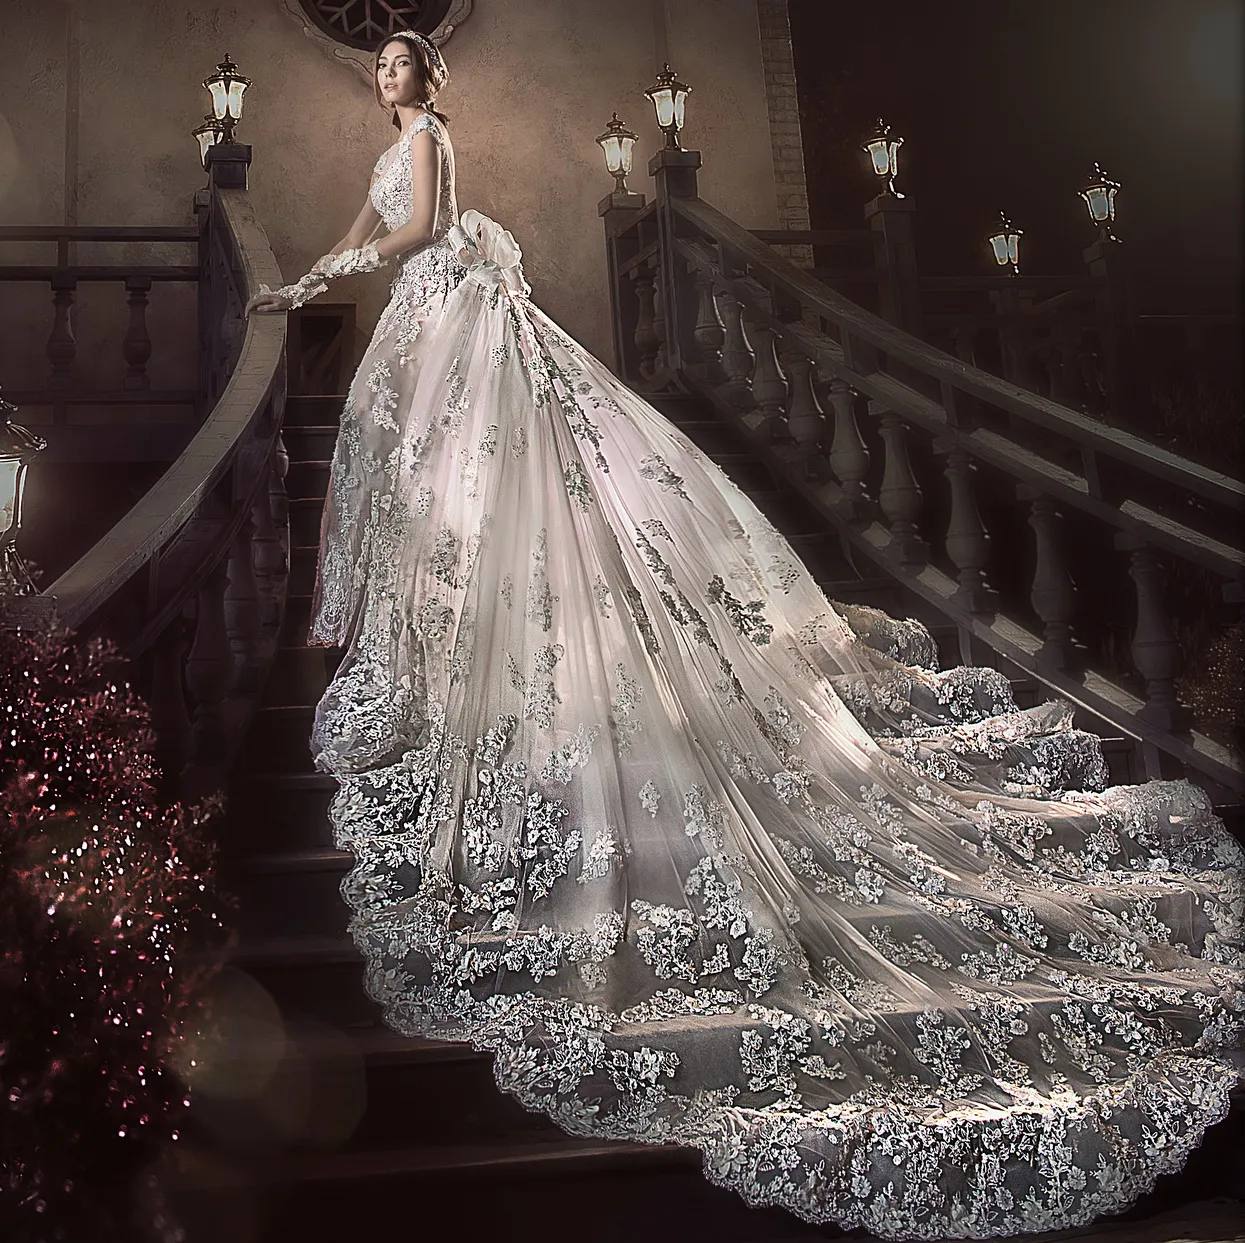 2.5 Meters Long Tail Wedding Dress Gorgeous Fashion Detachable Train Beach Wedding Dress Luxury Crystal Beaded Applique Mermaid Wedding Gown